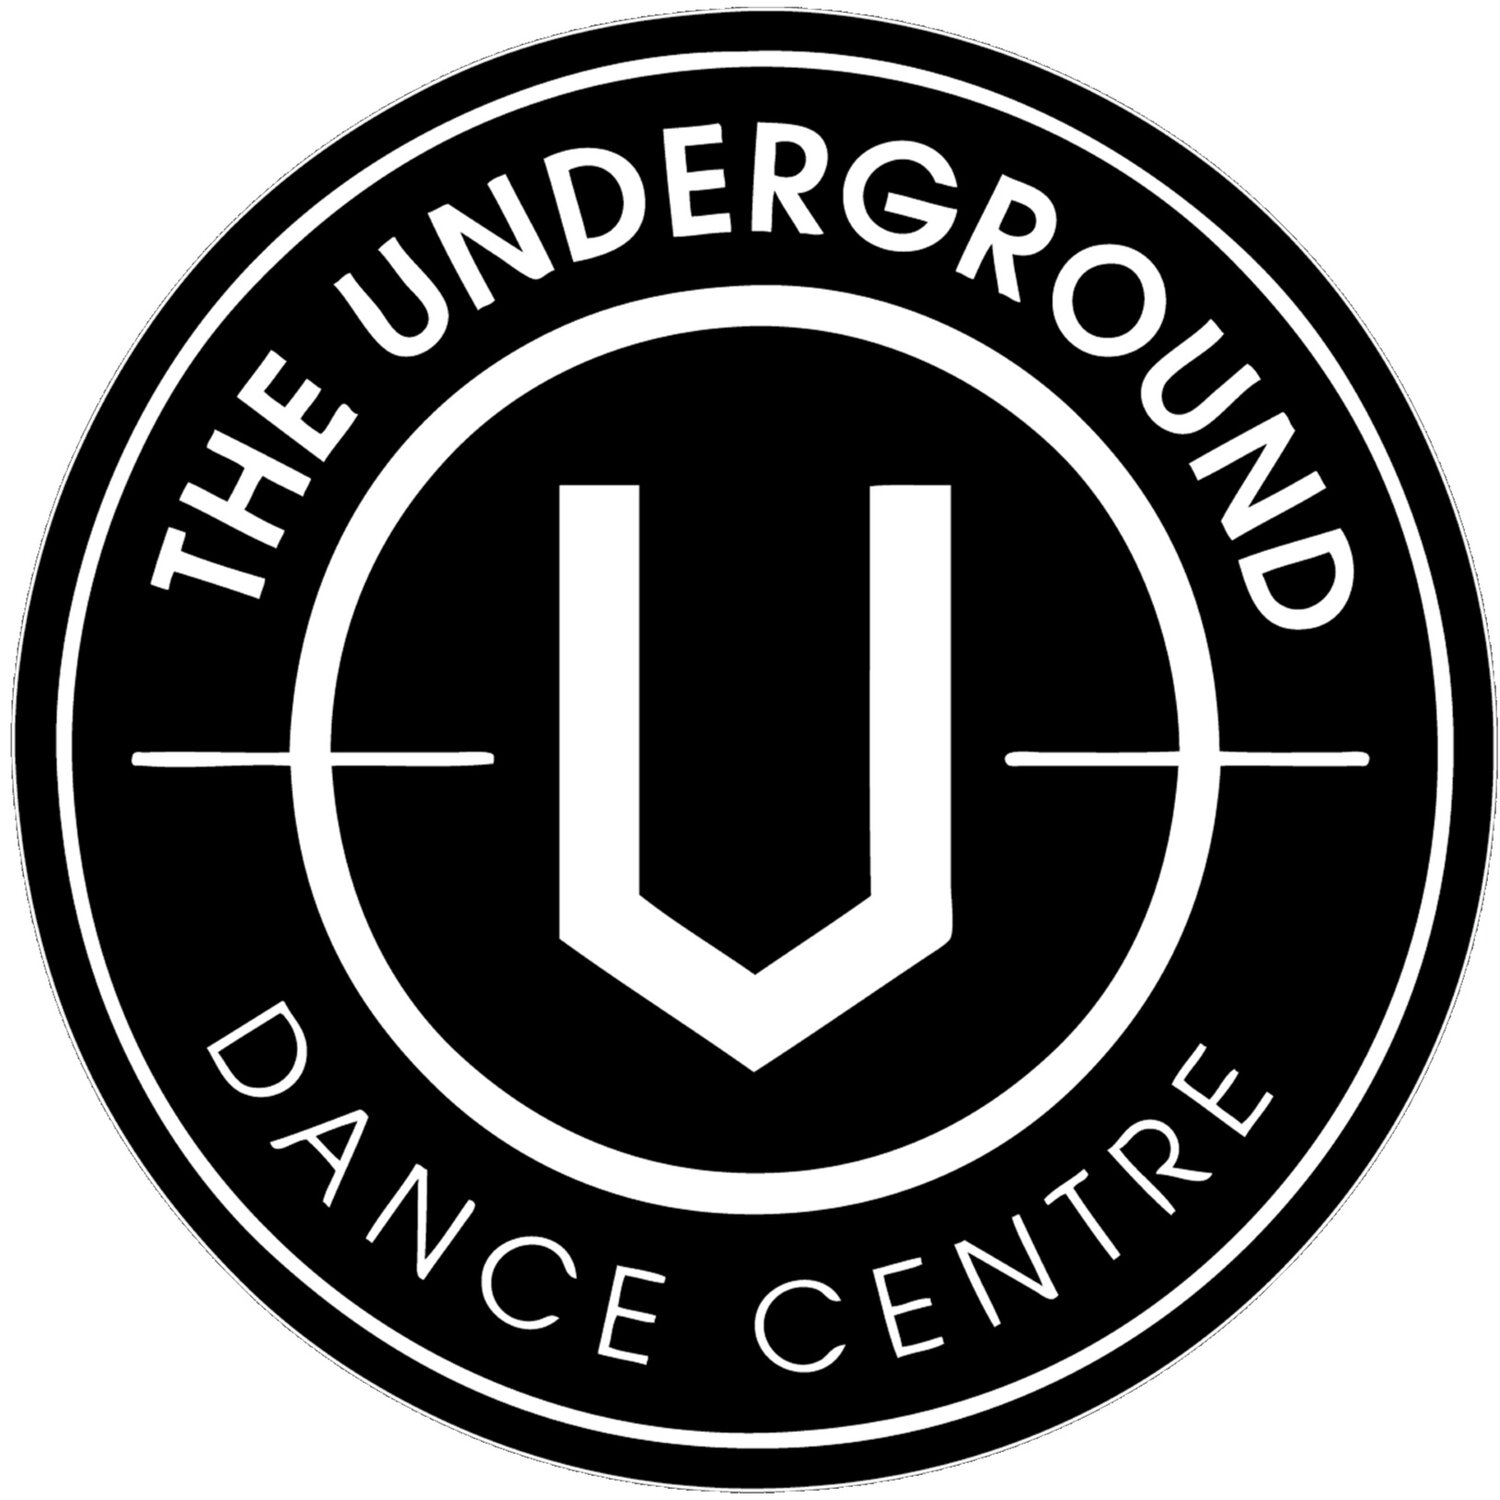 The Underground Dance Centre - Best Dance Classes